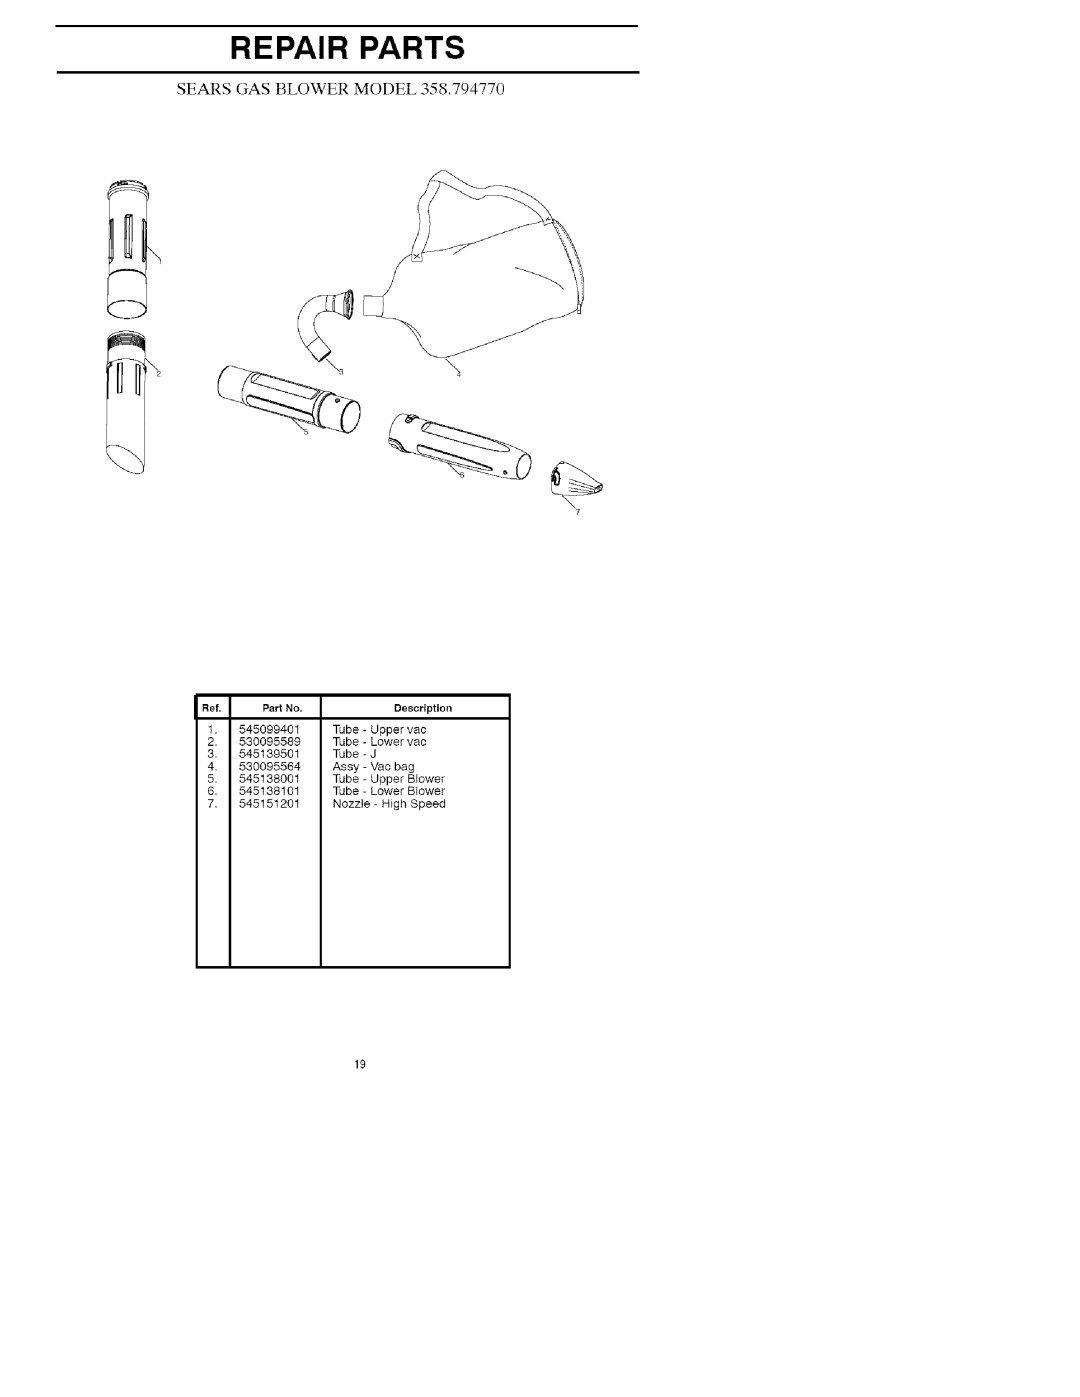 Craftsman 358.79477 manual Repair Parts, Sears Gas Blower Model, I Ref, Description 